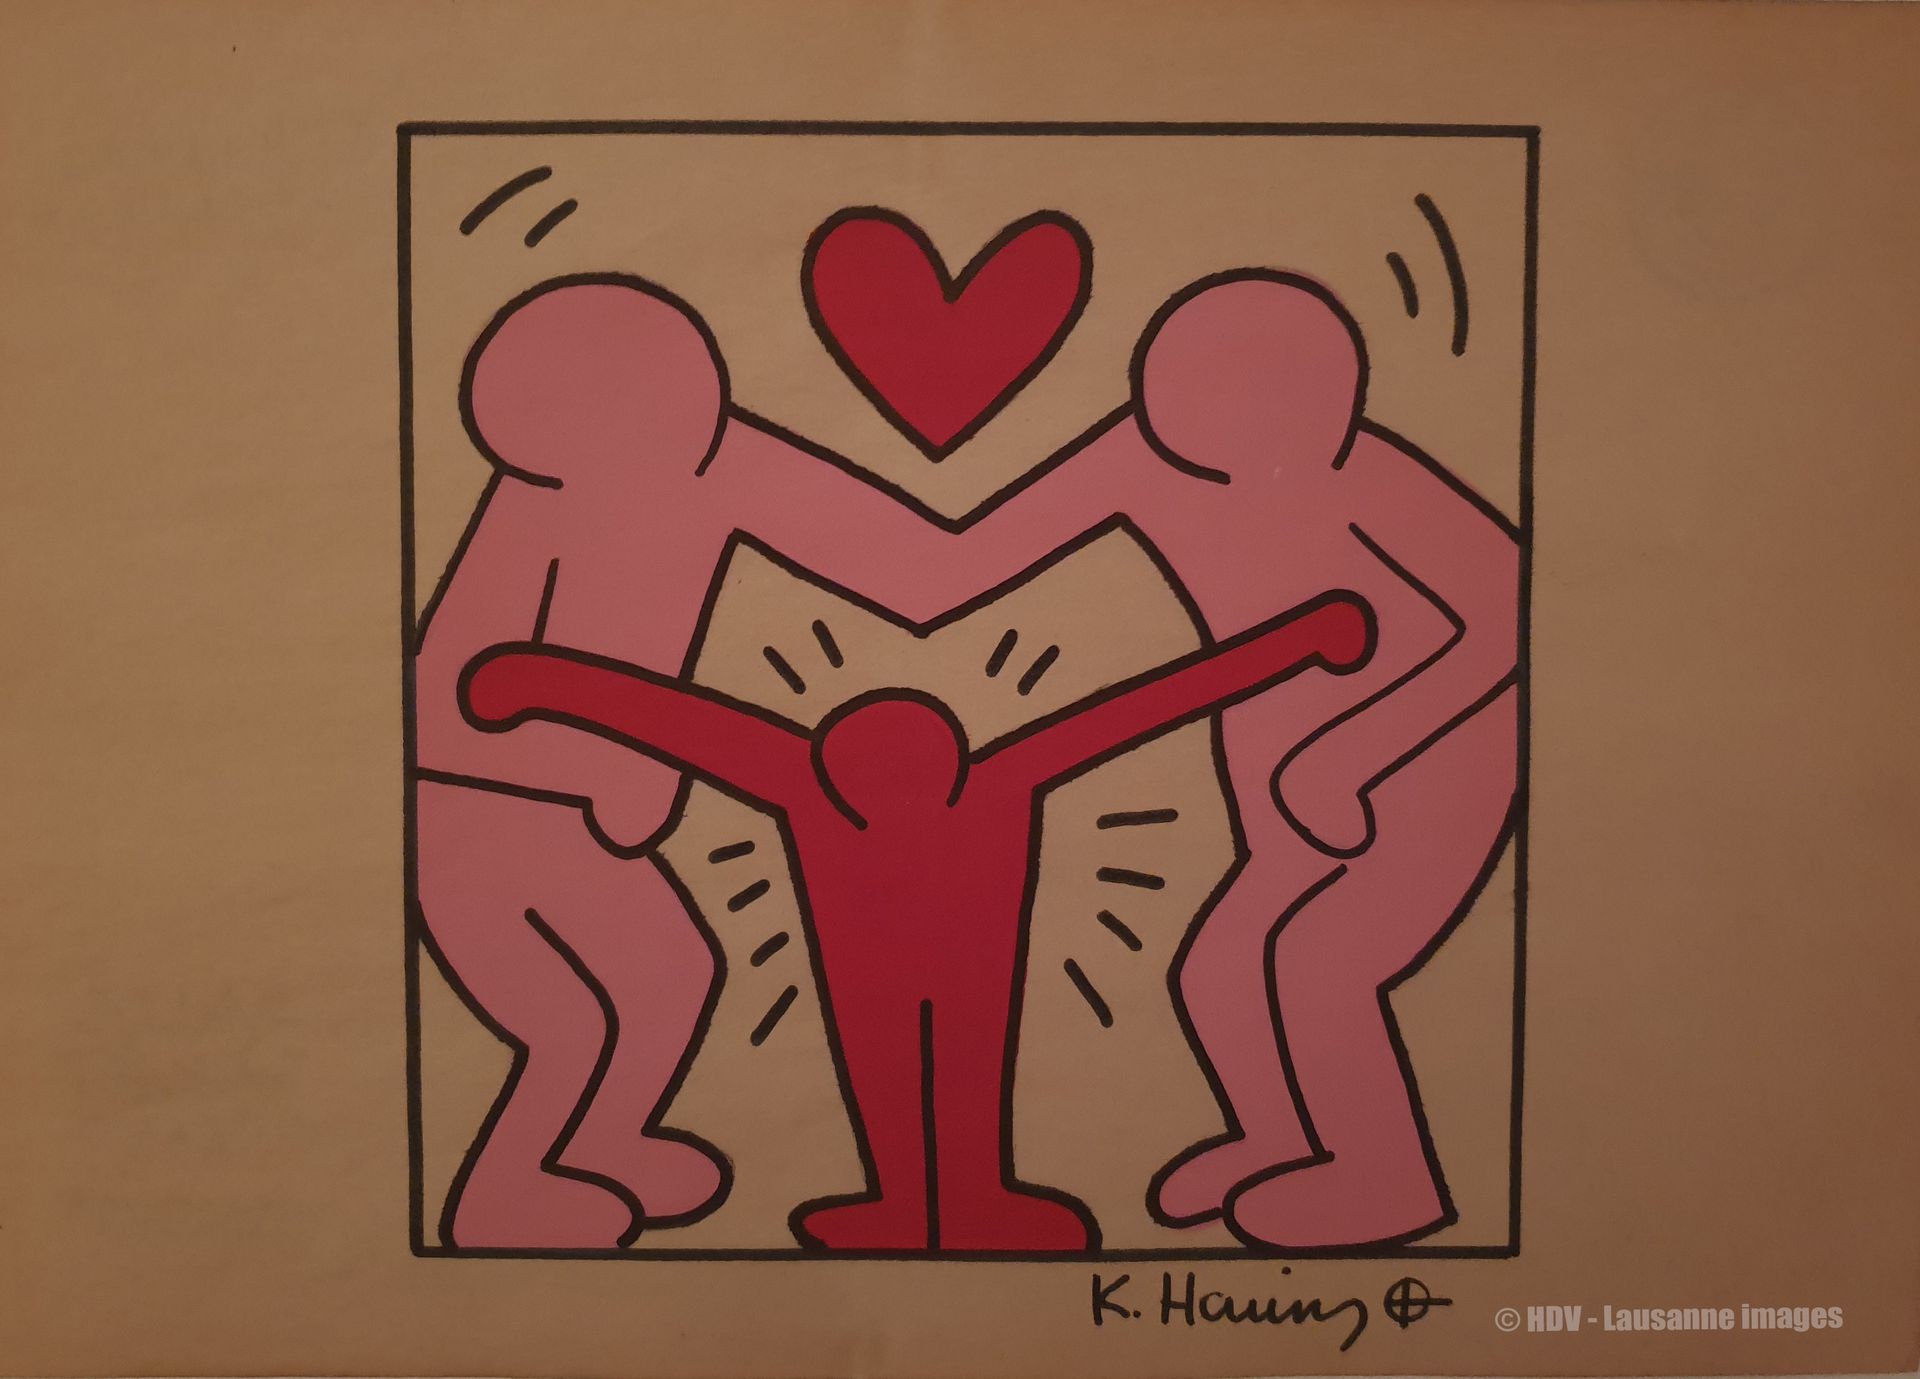 Keith HARING (1958 -1990) "En plein cœur" Acquerello su carta, 21 x 29,5 cm, fir&hellip;